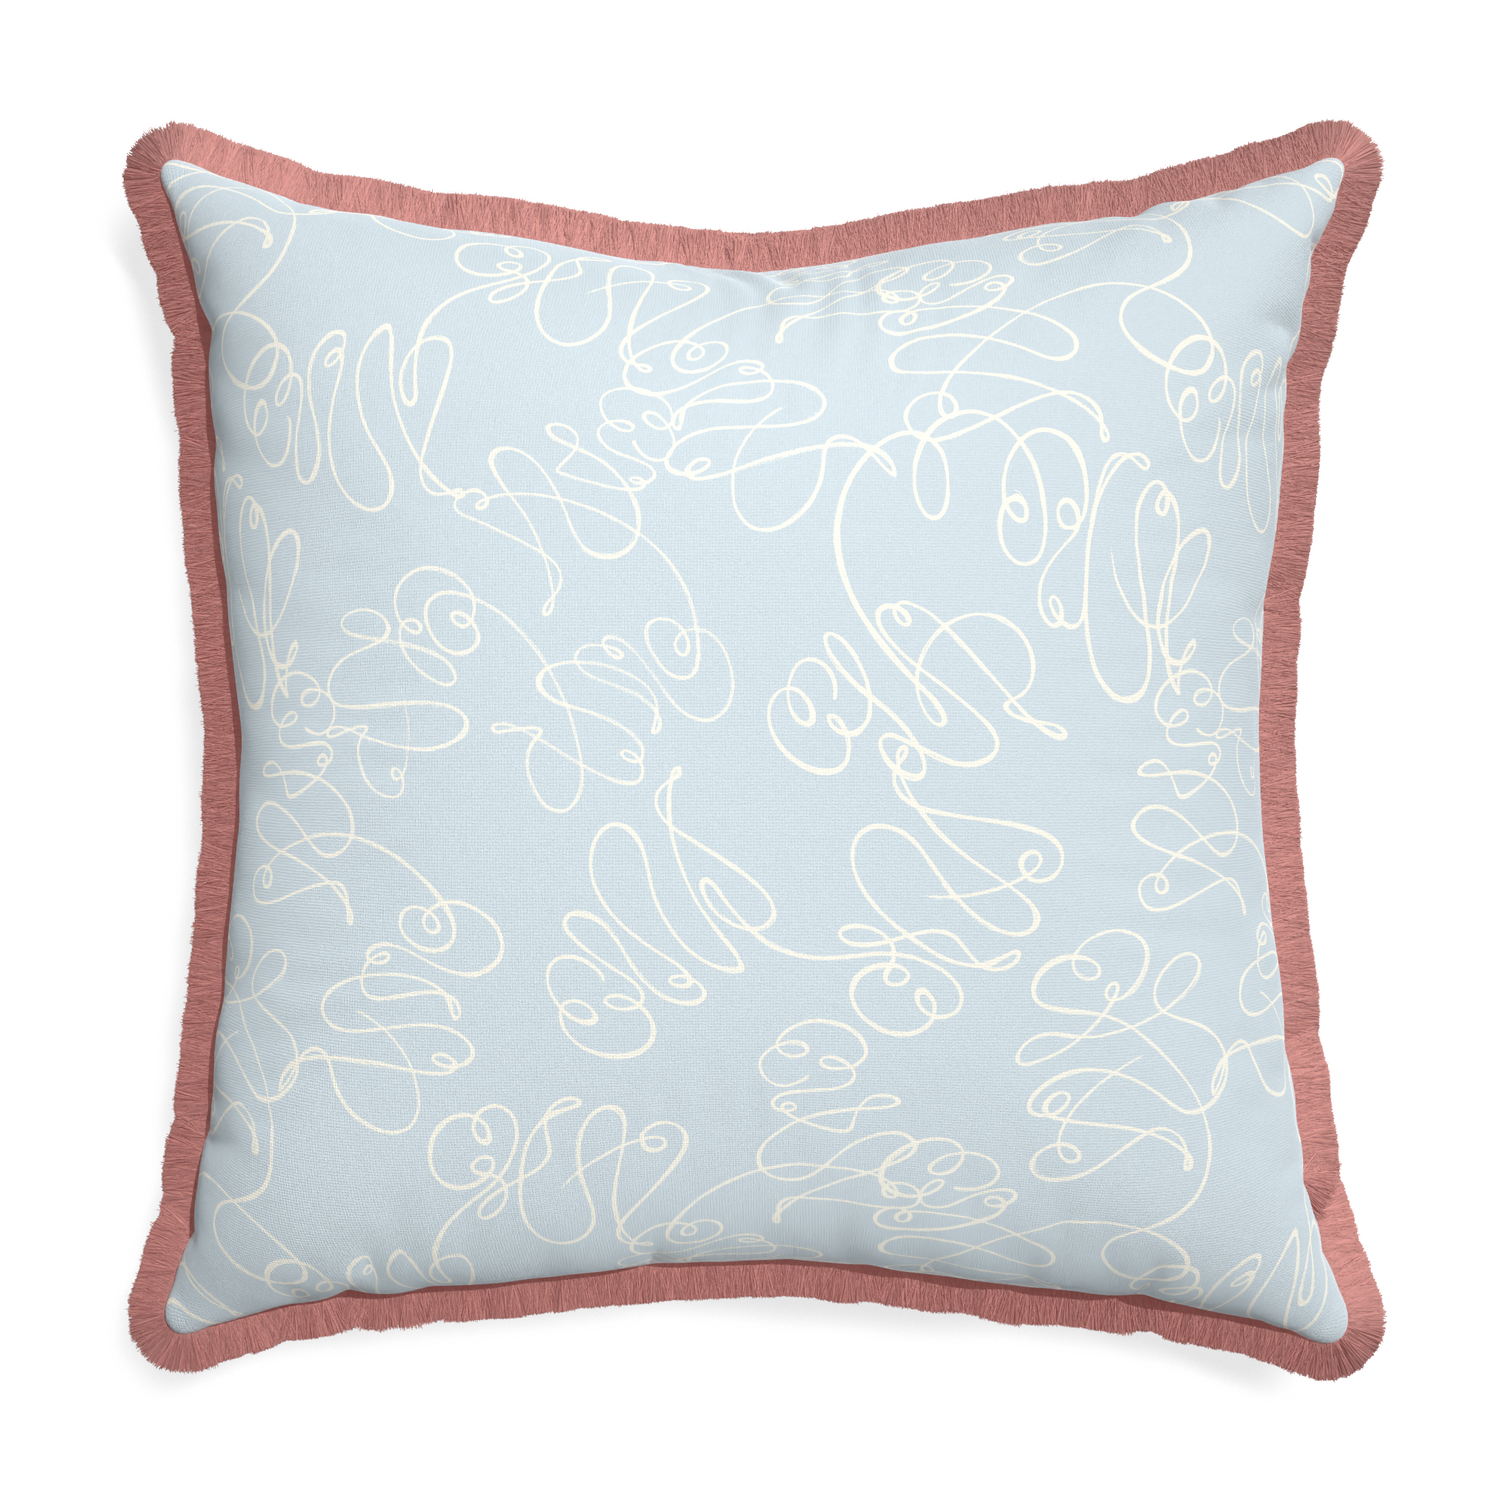 Euro-sham mirabella custom pillow with d fringe on white background